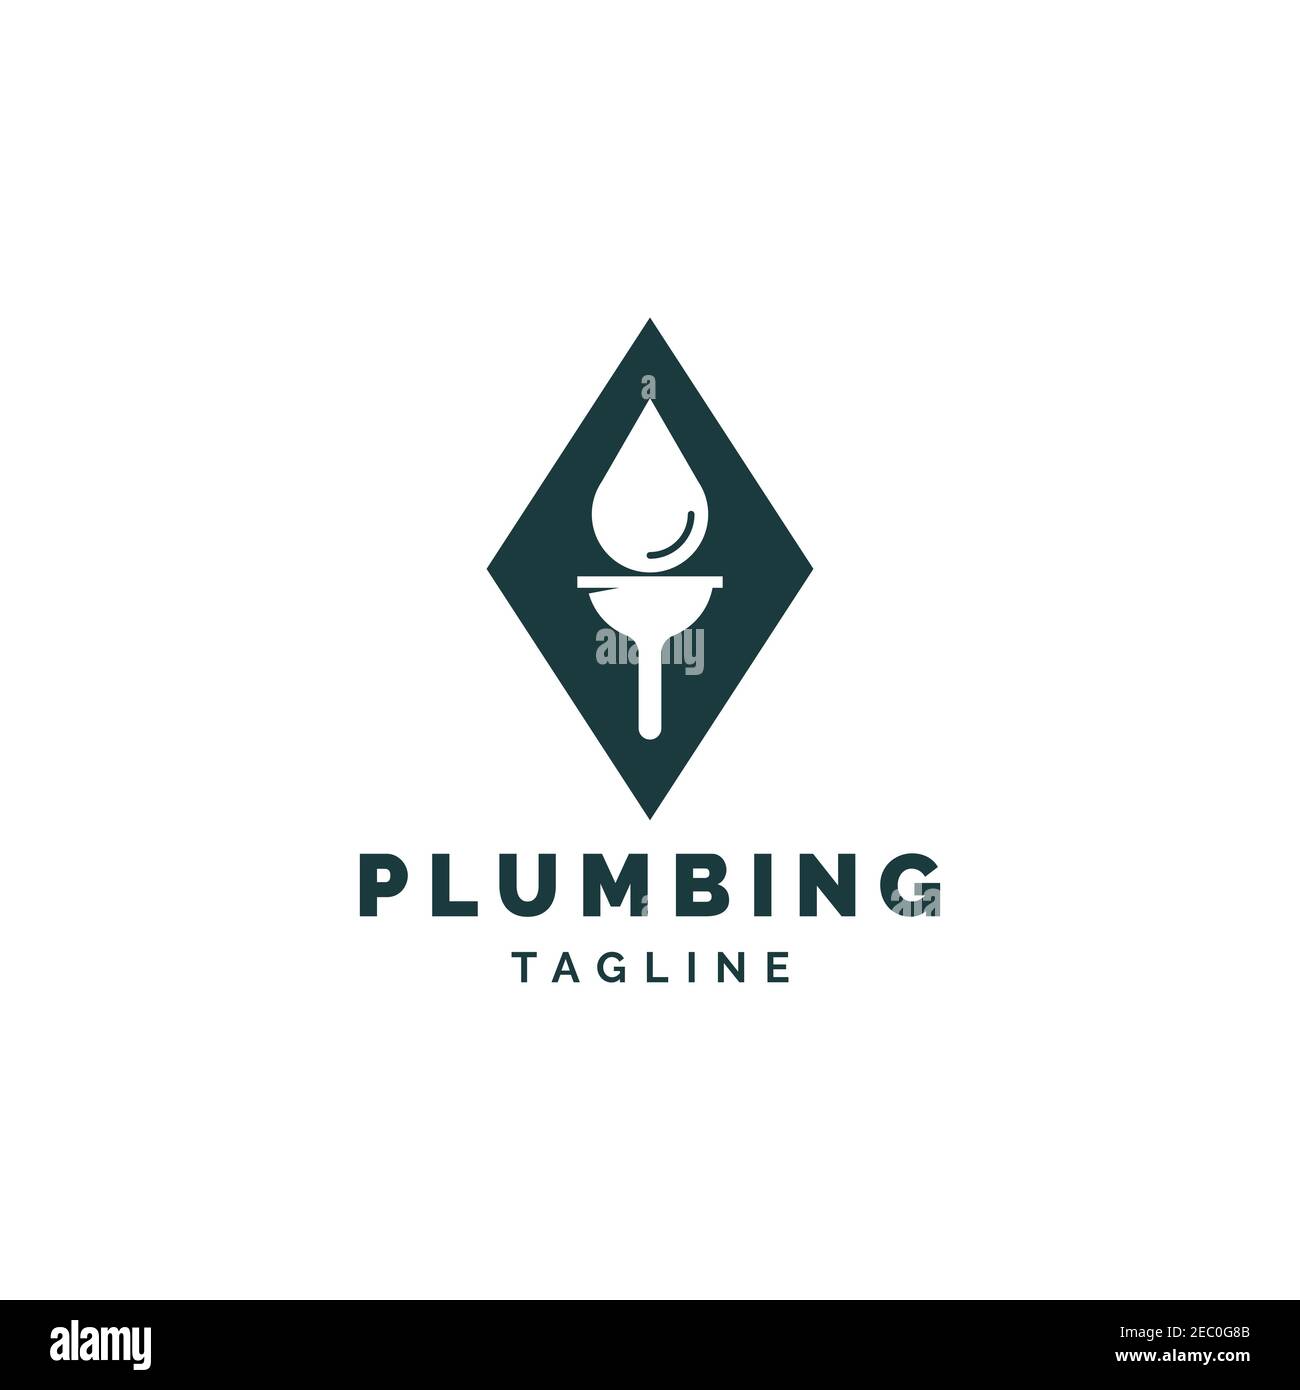 Plumbing logo design inspiration vector template Stock Vector